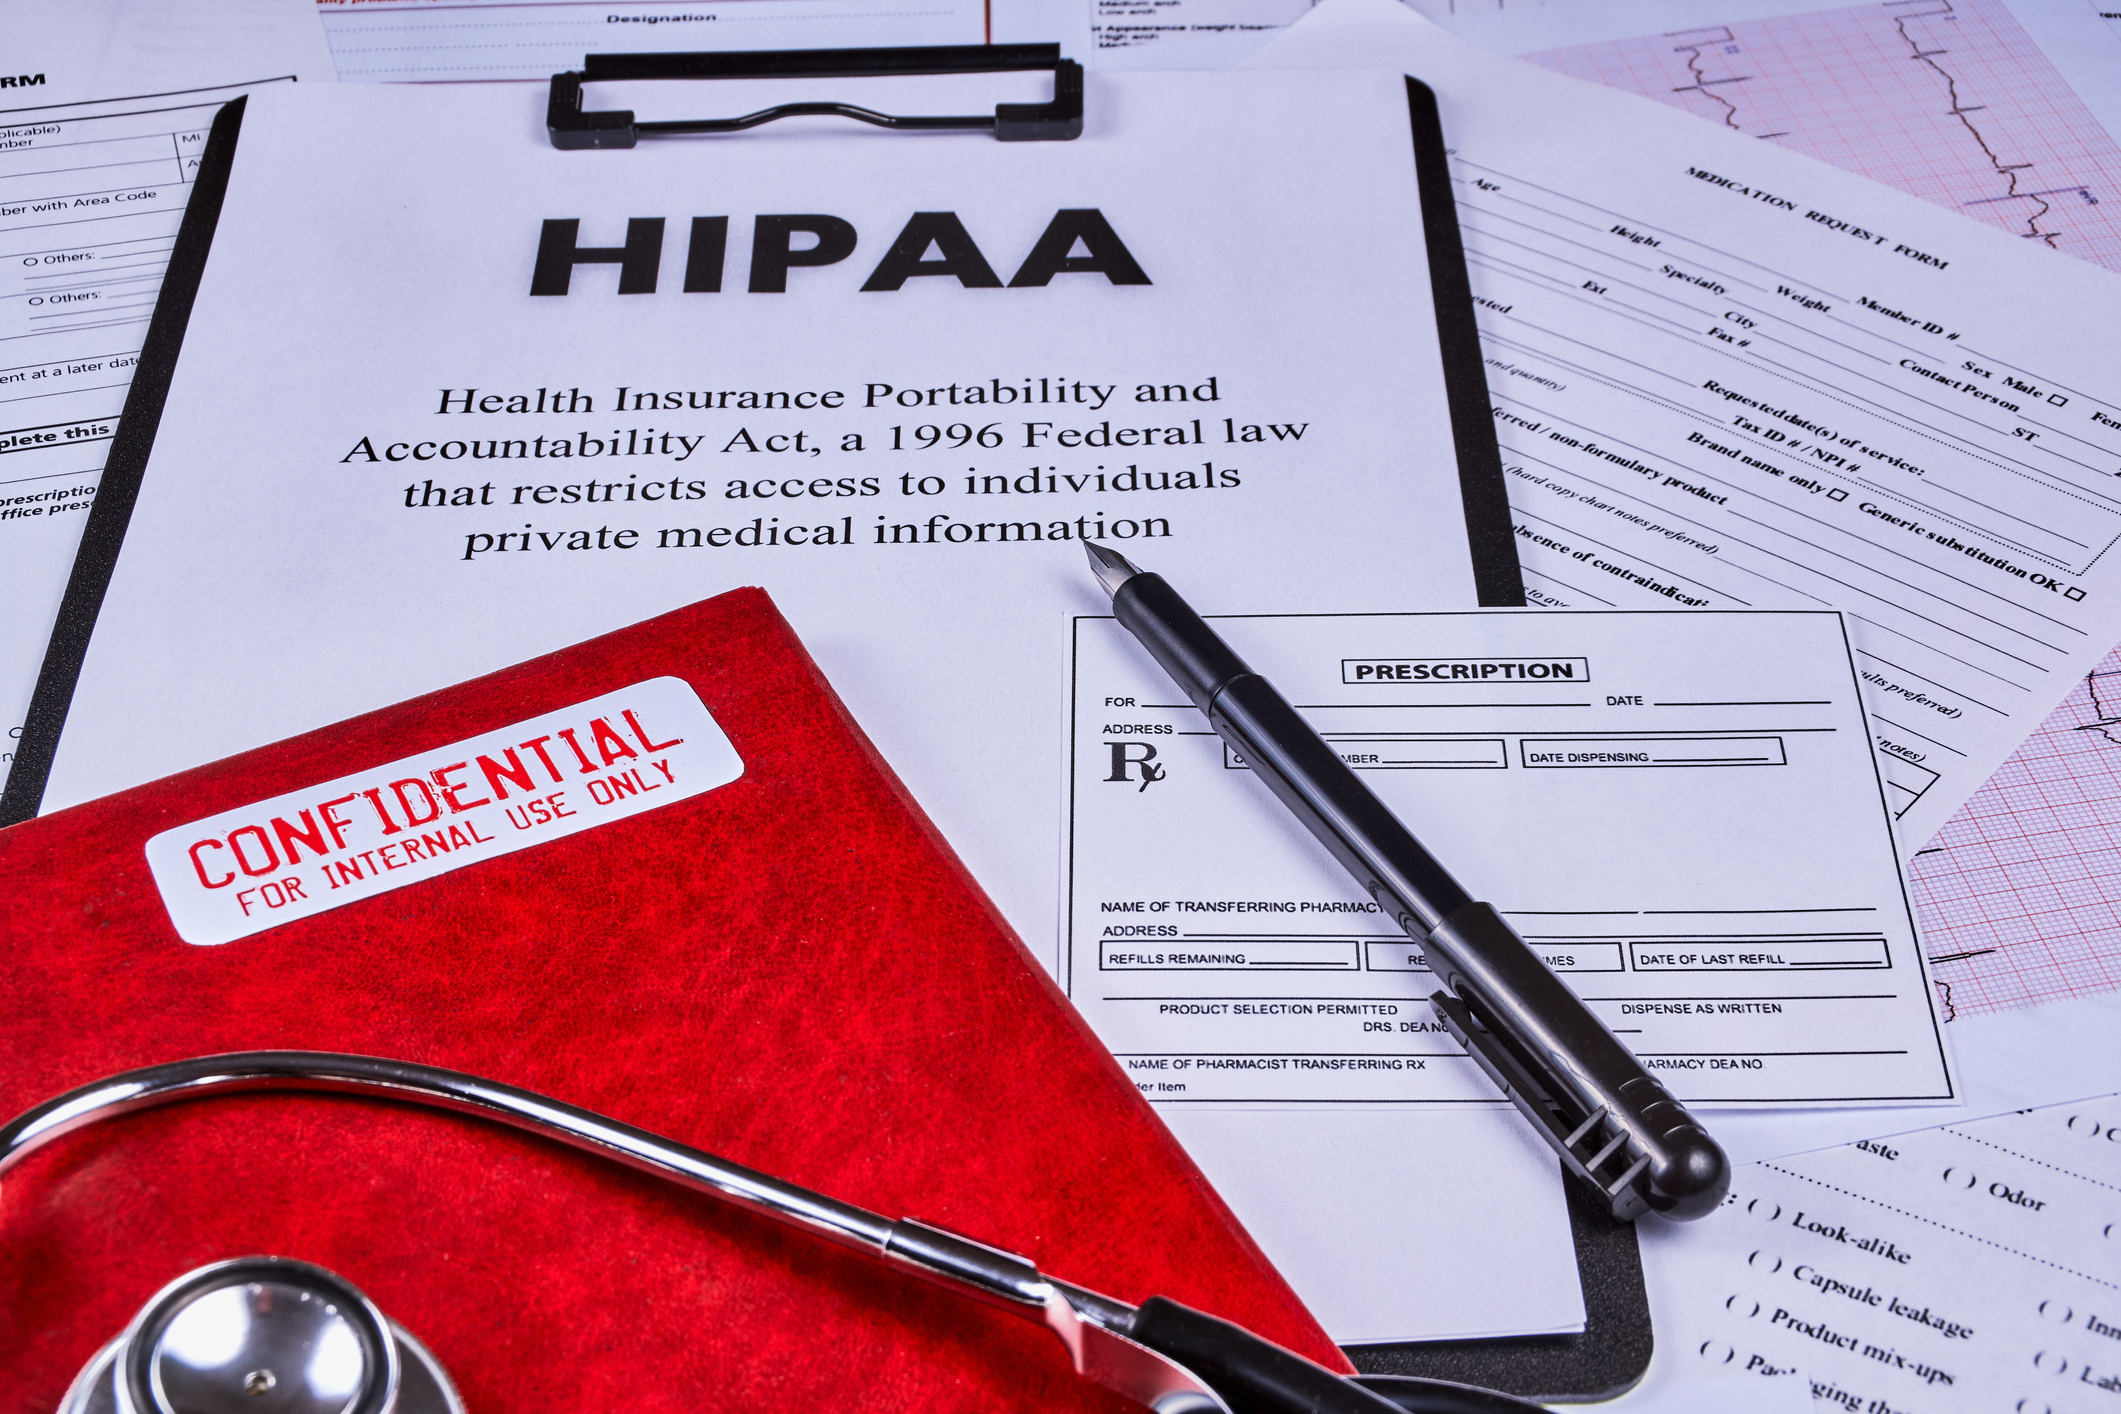 HIPAA regulation image